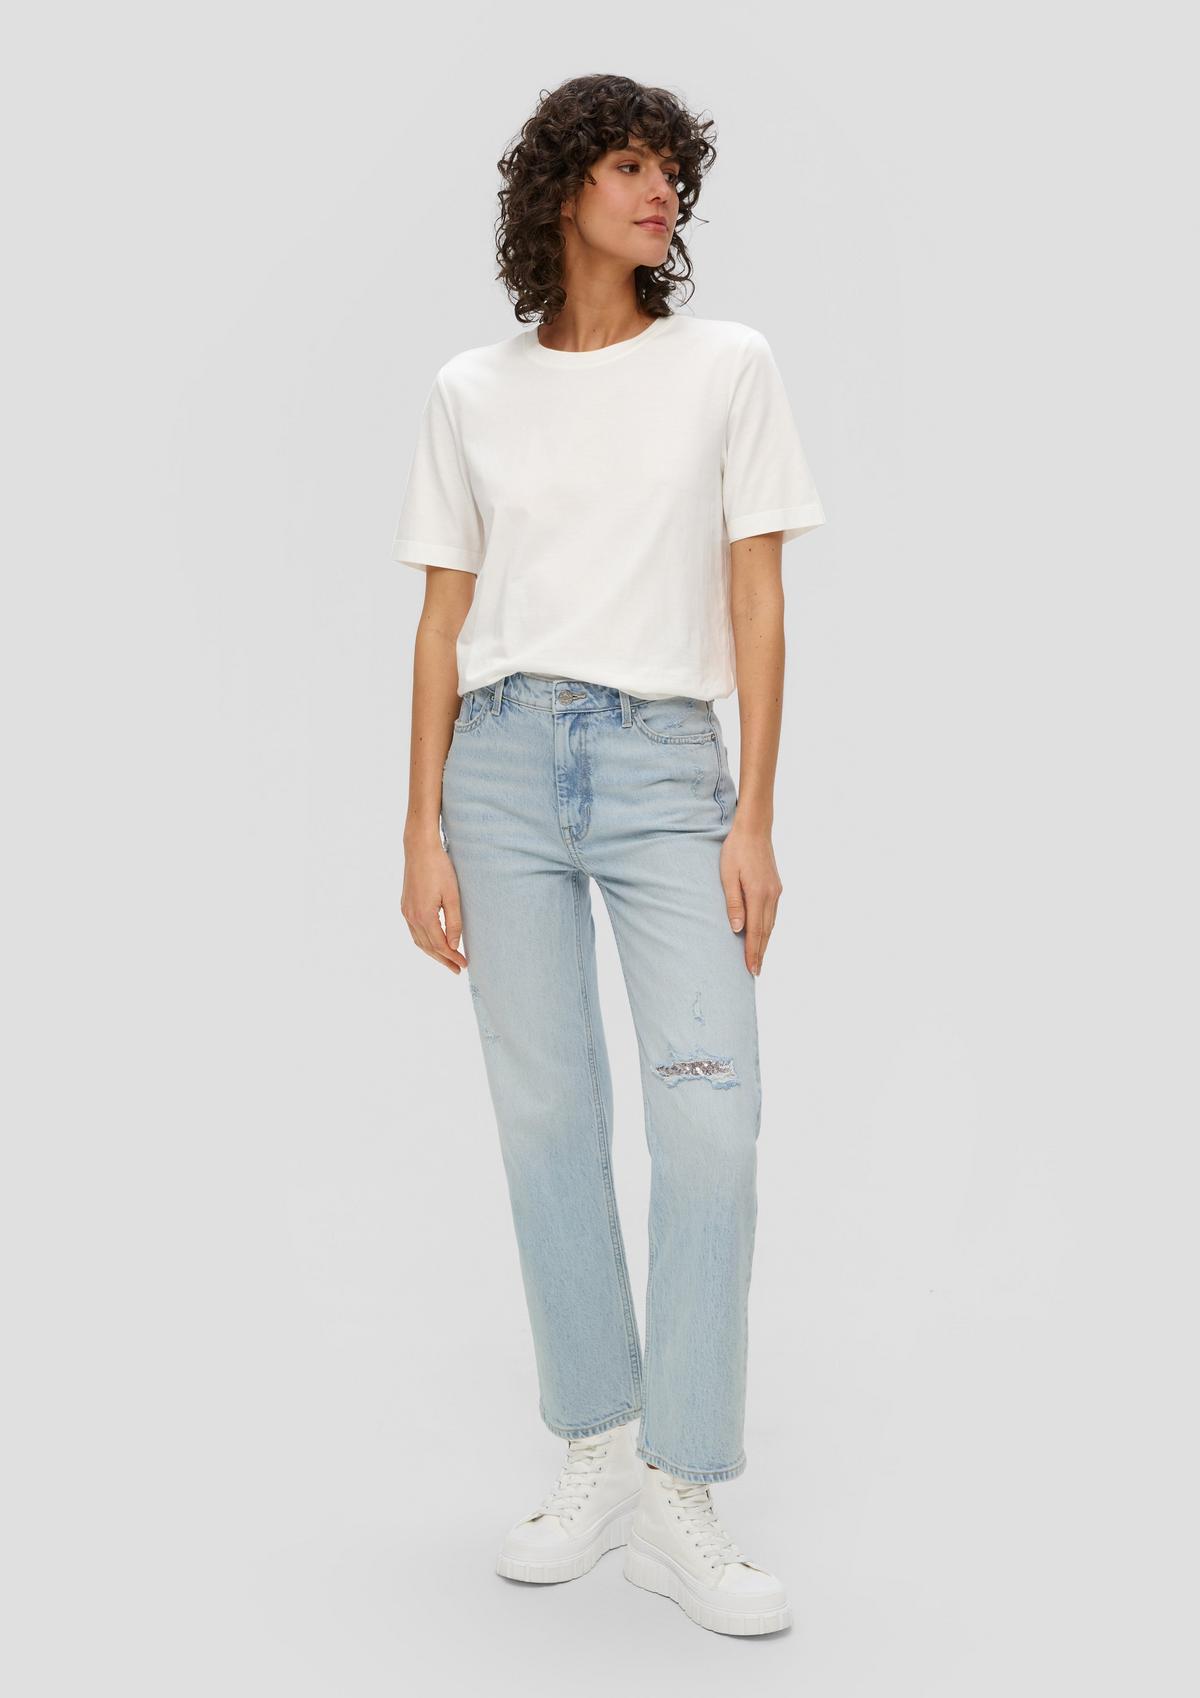 s.Oliver Karolin cropped jeans / regular fit / high rise / straight leg / sequin detail